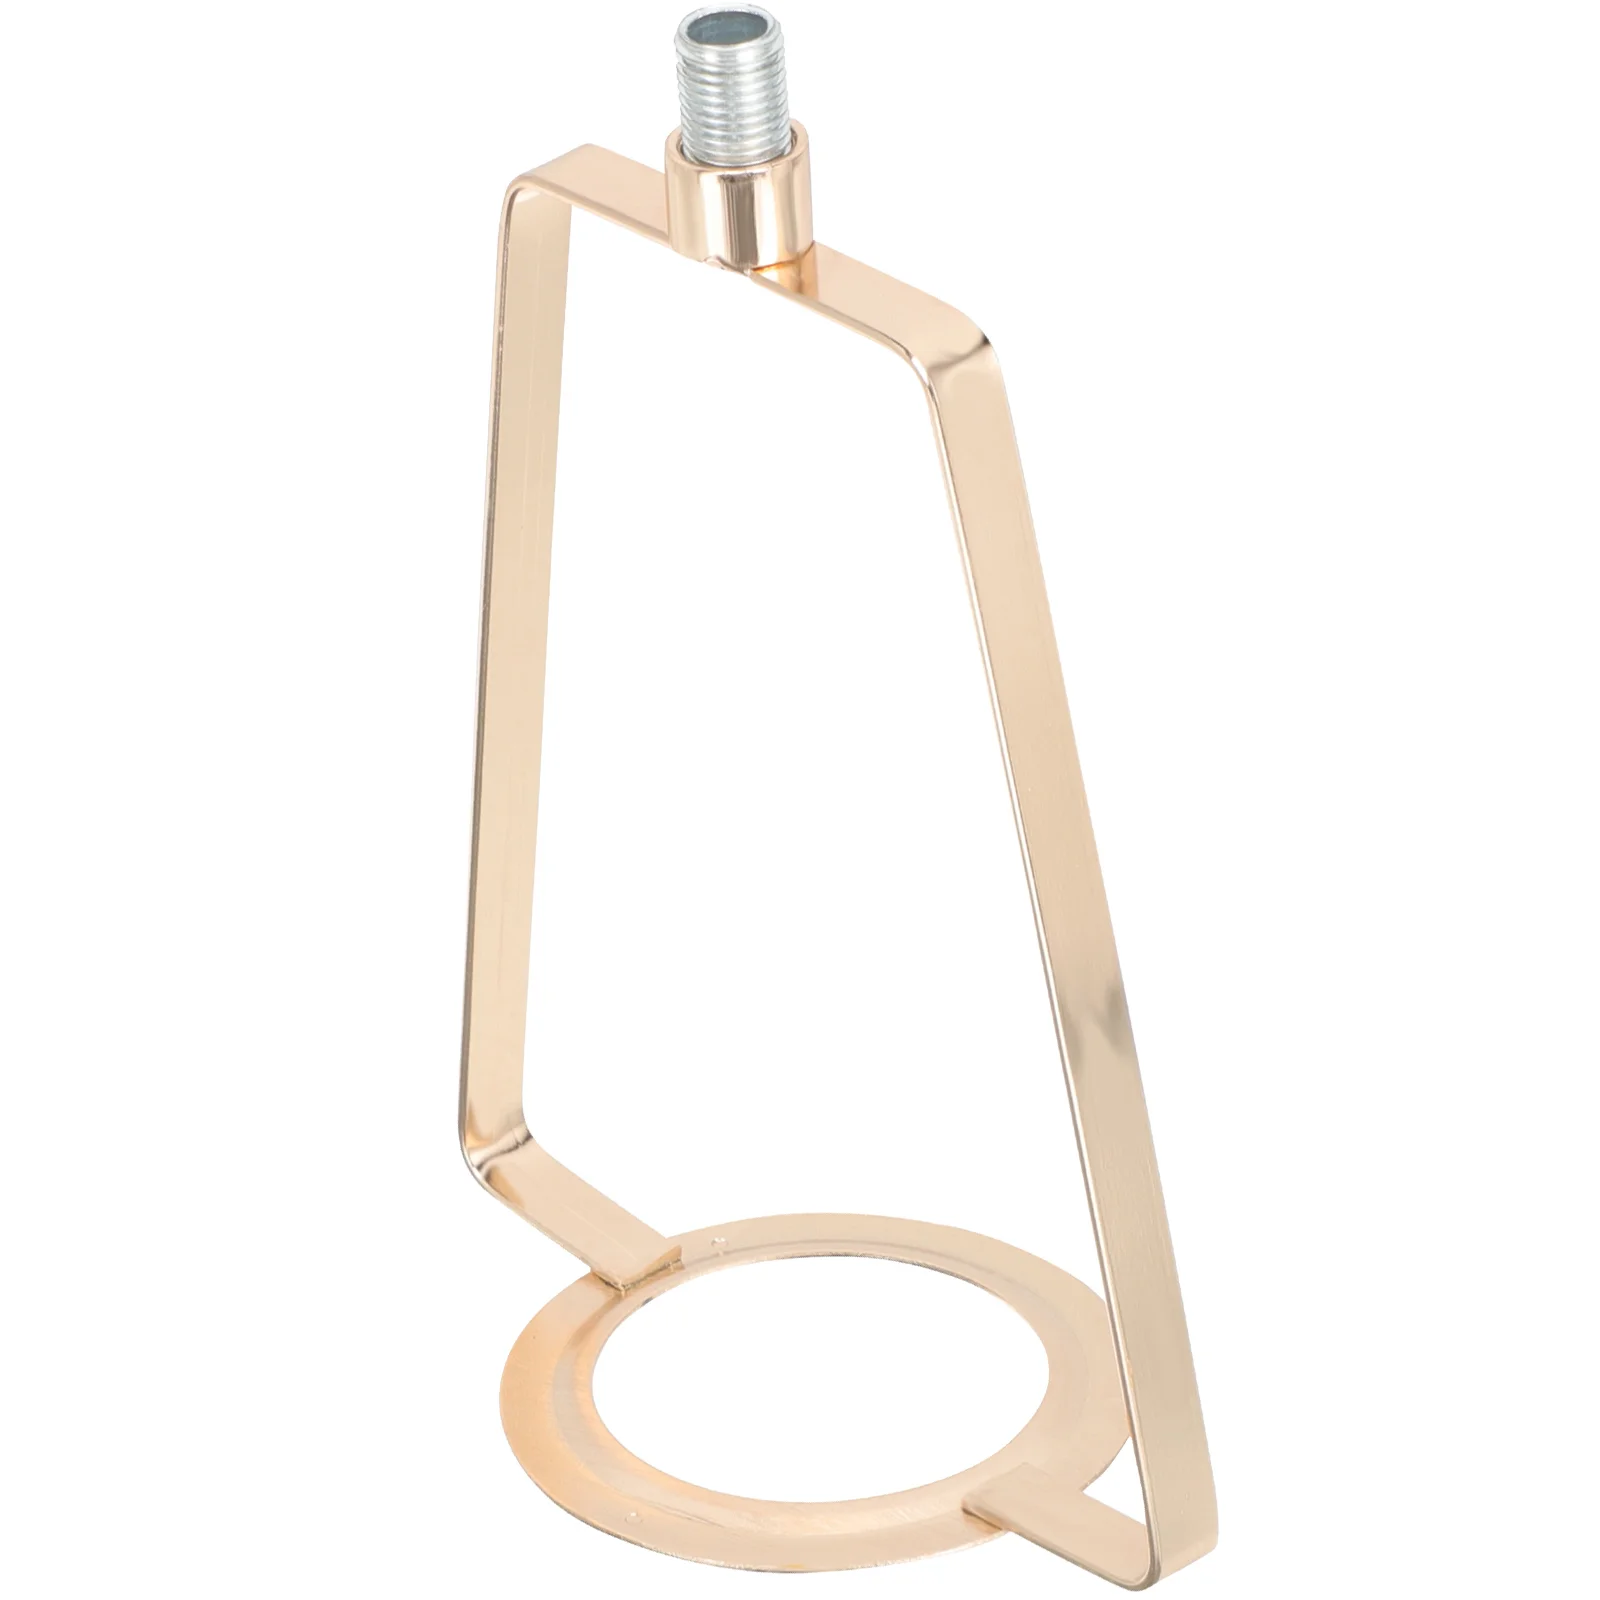 Lamp Harp Metal Decor Frame Decor Adapter Diy Lighting Accessory